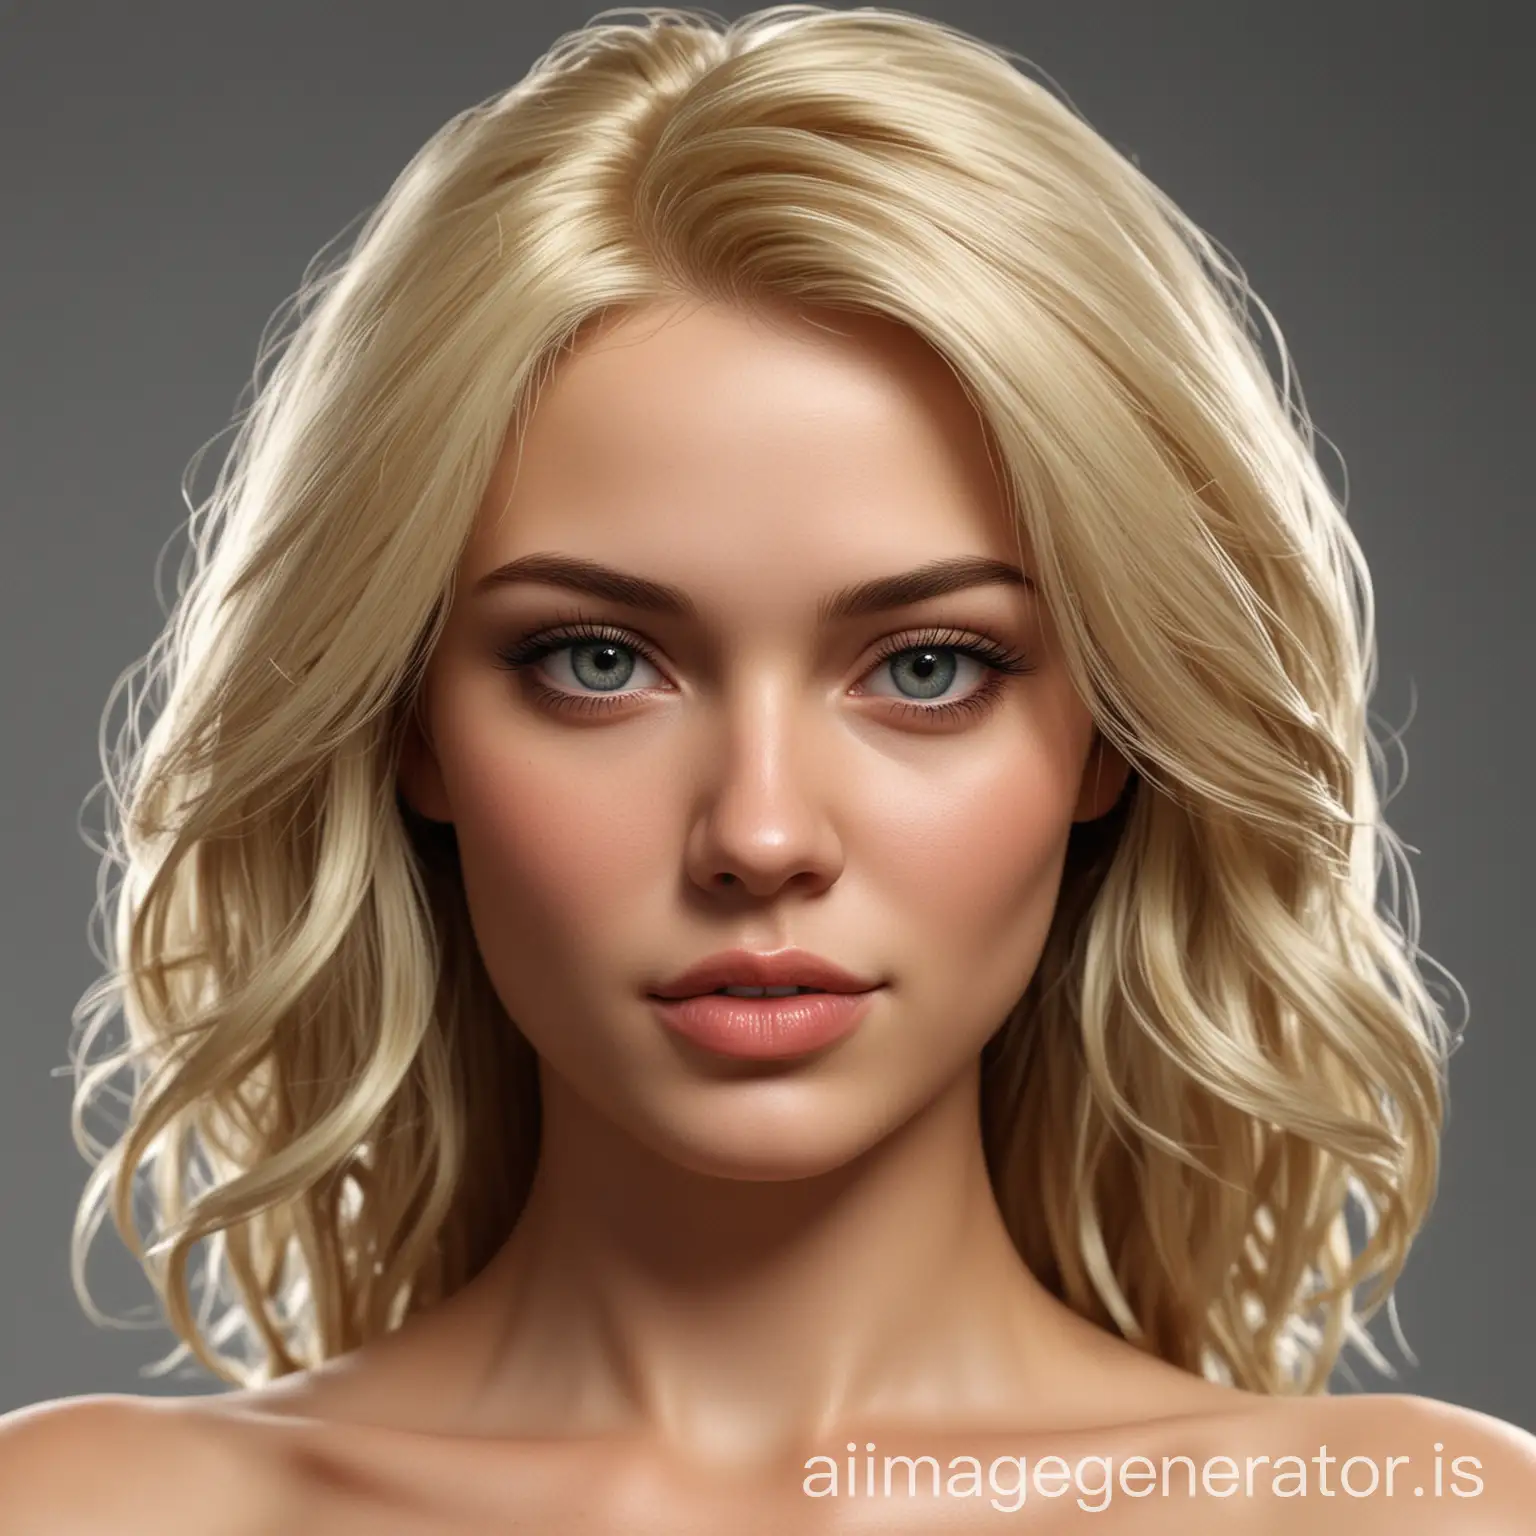 Realistic-Portrait-of-a-Beautiful-Blonde-Woman